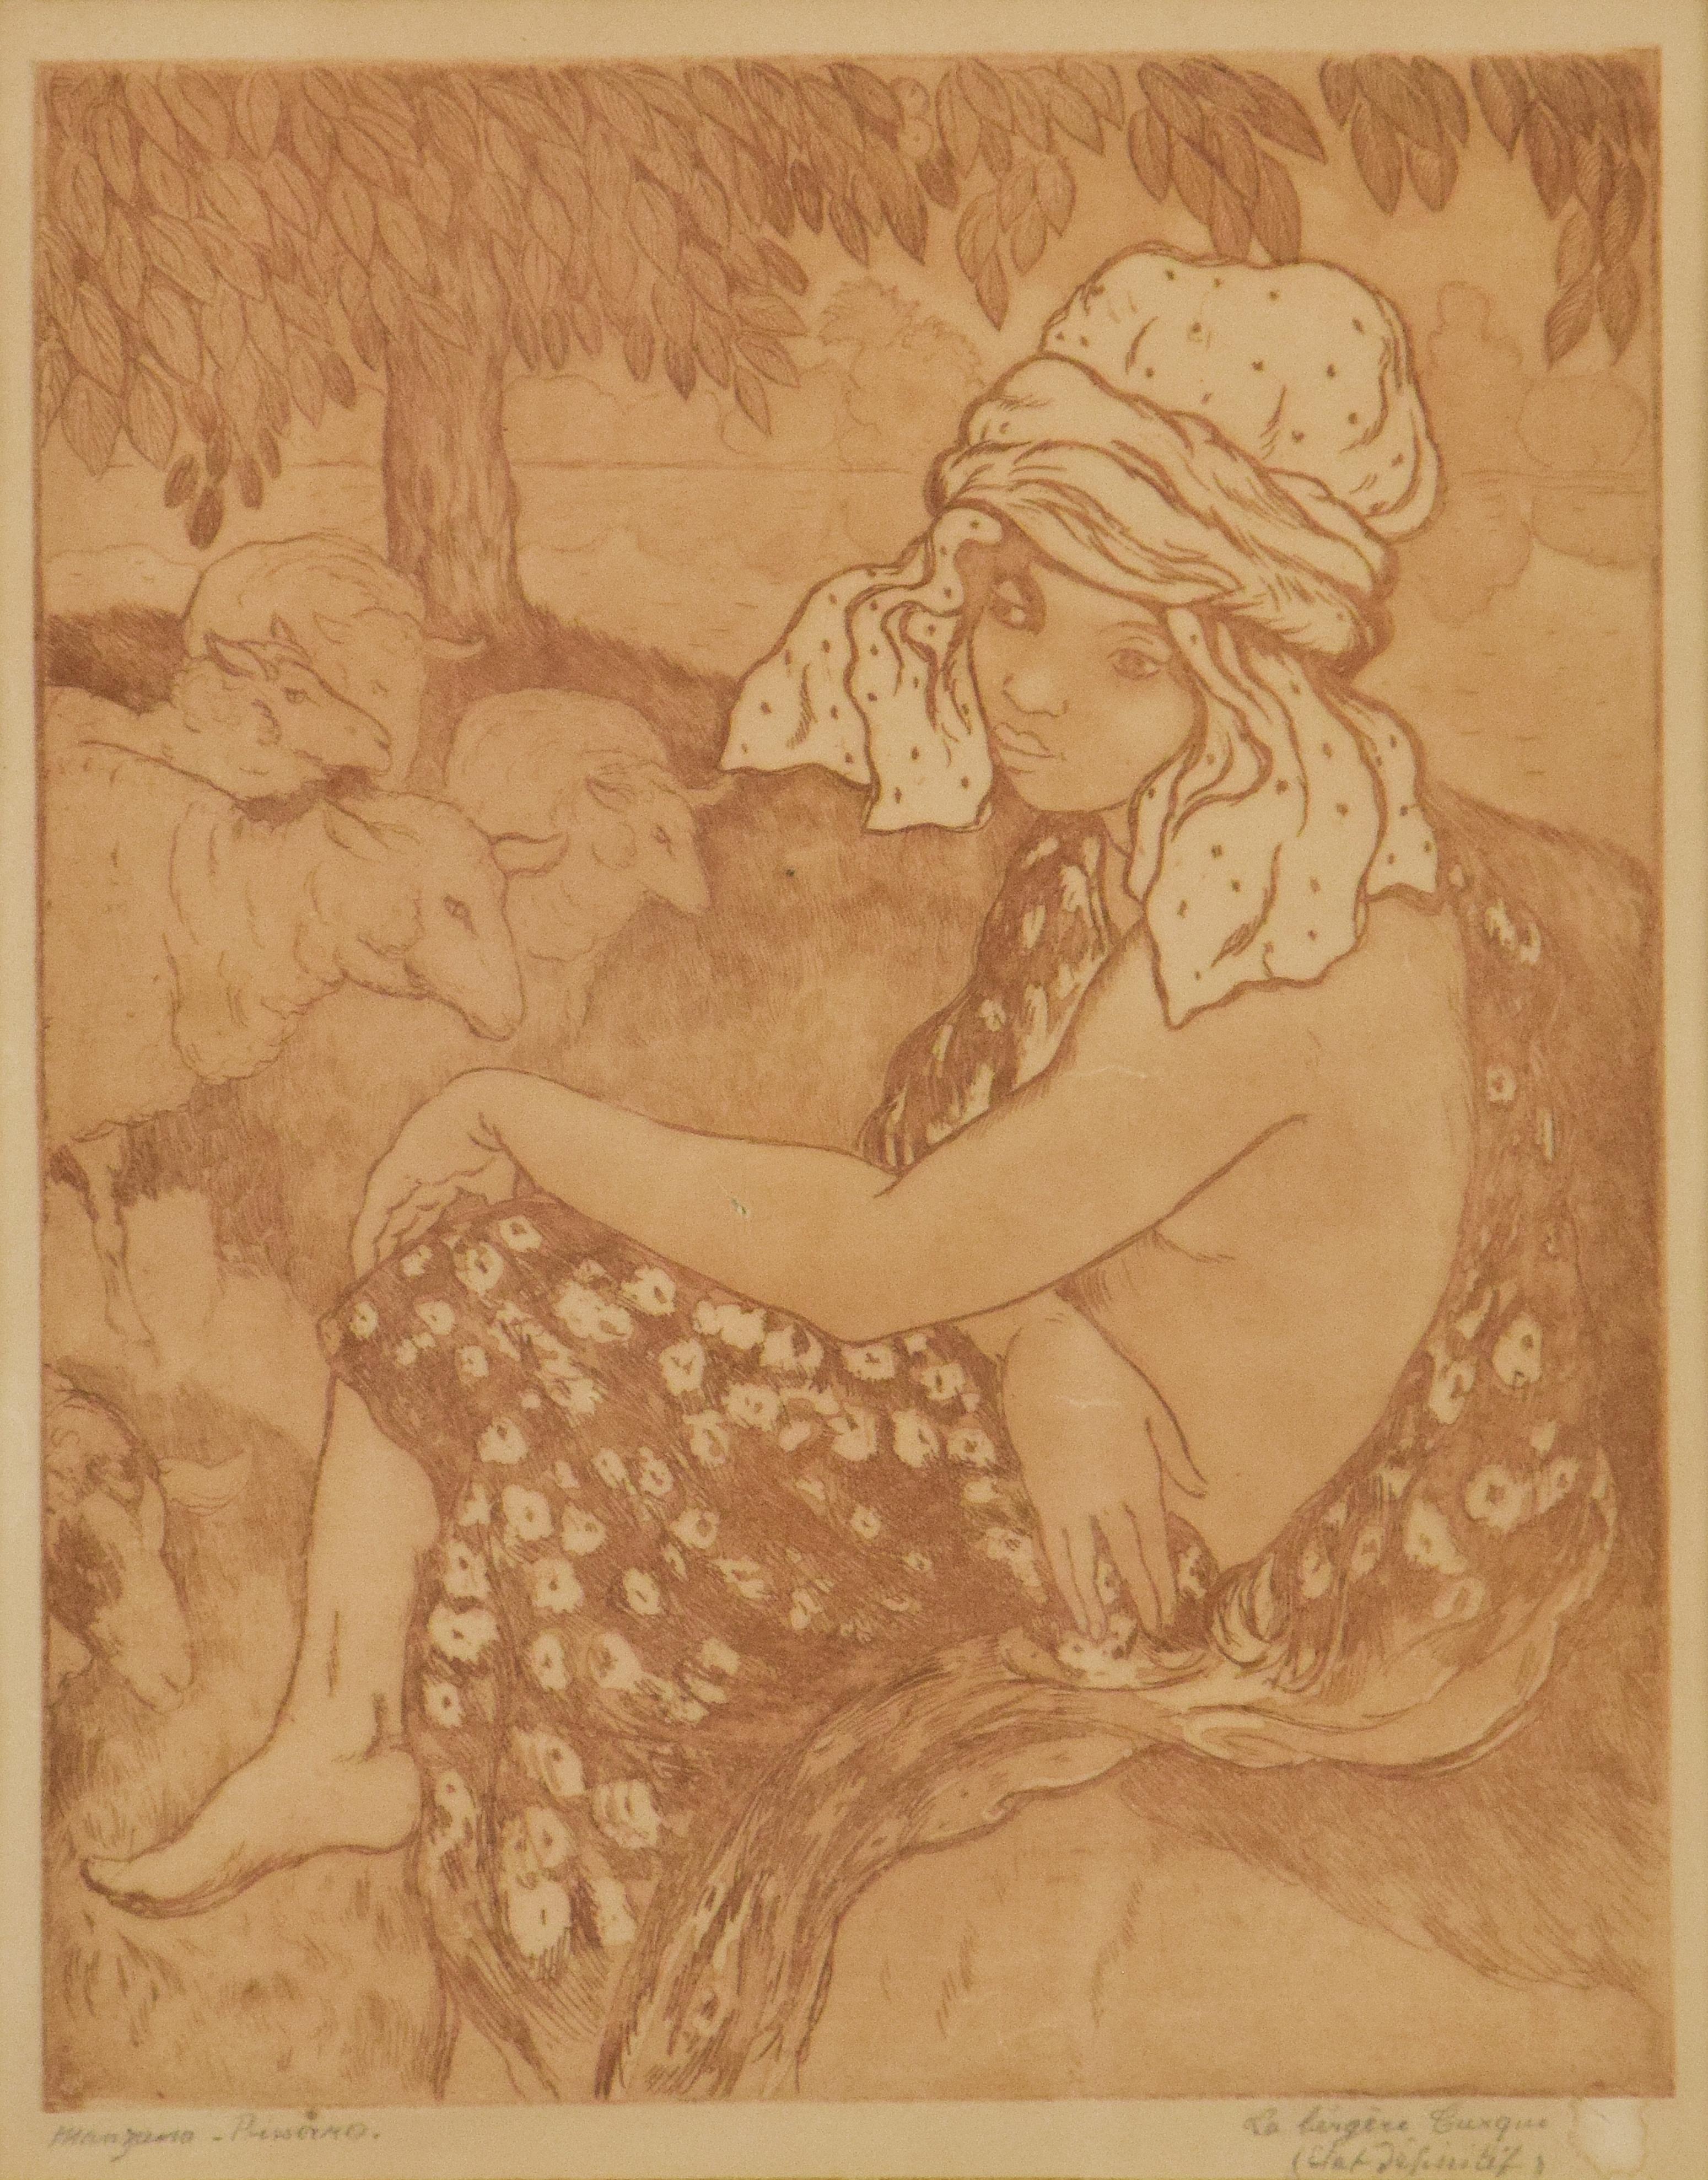 Print by Georges Manzana Pissarro 'La Bergère Turque' (The Turkish Shepherdess)